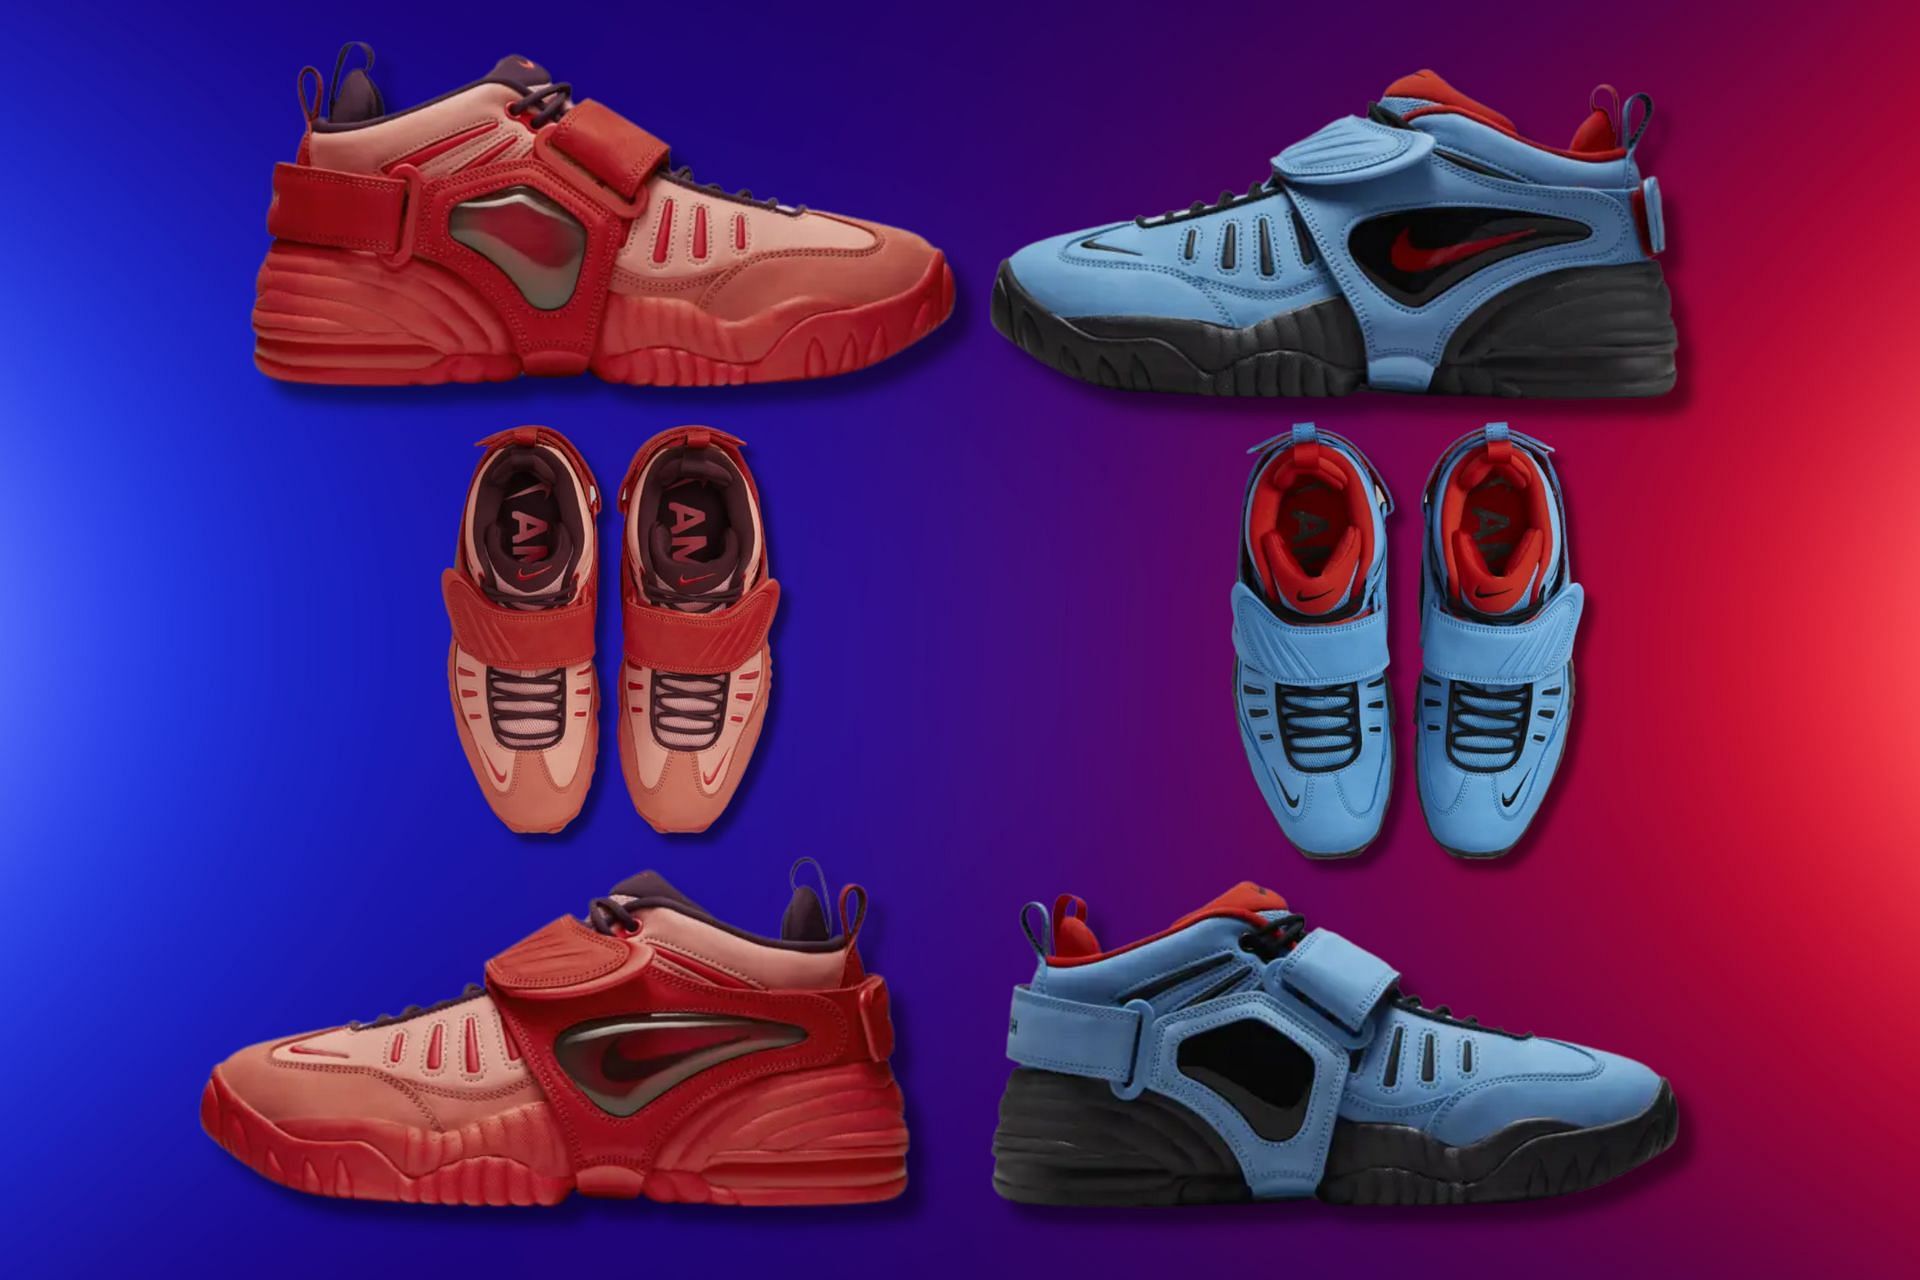 Upcoming Ambush x Nike Air Adjust Force sneakers in University Blue and Light Madder Root colorway (Image via Sportskeeda)